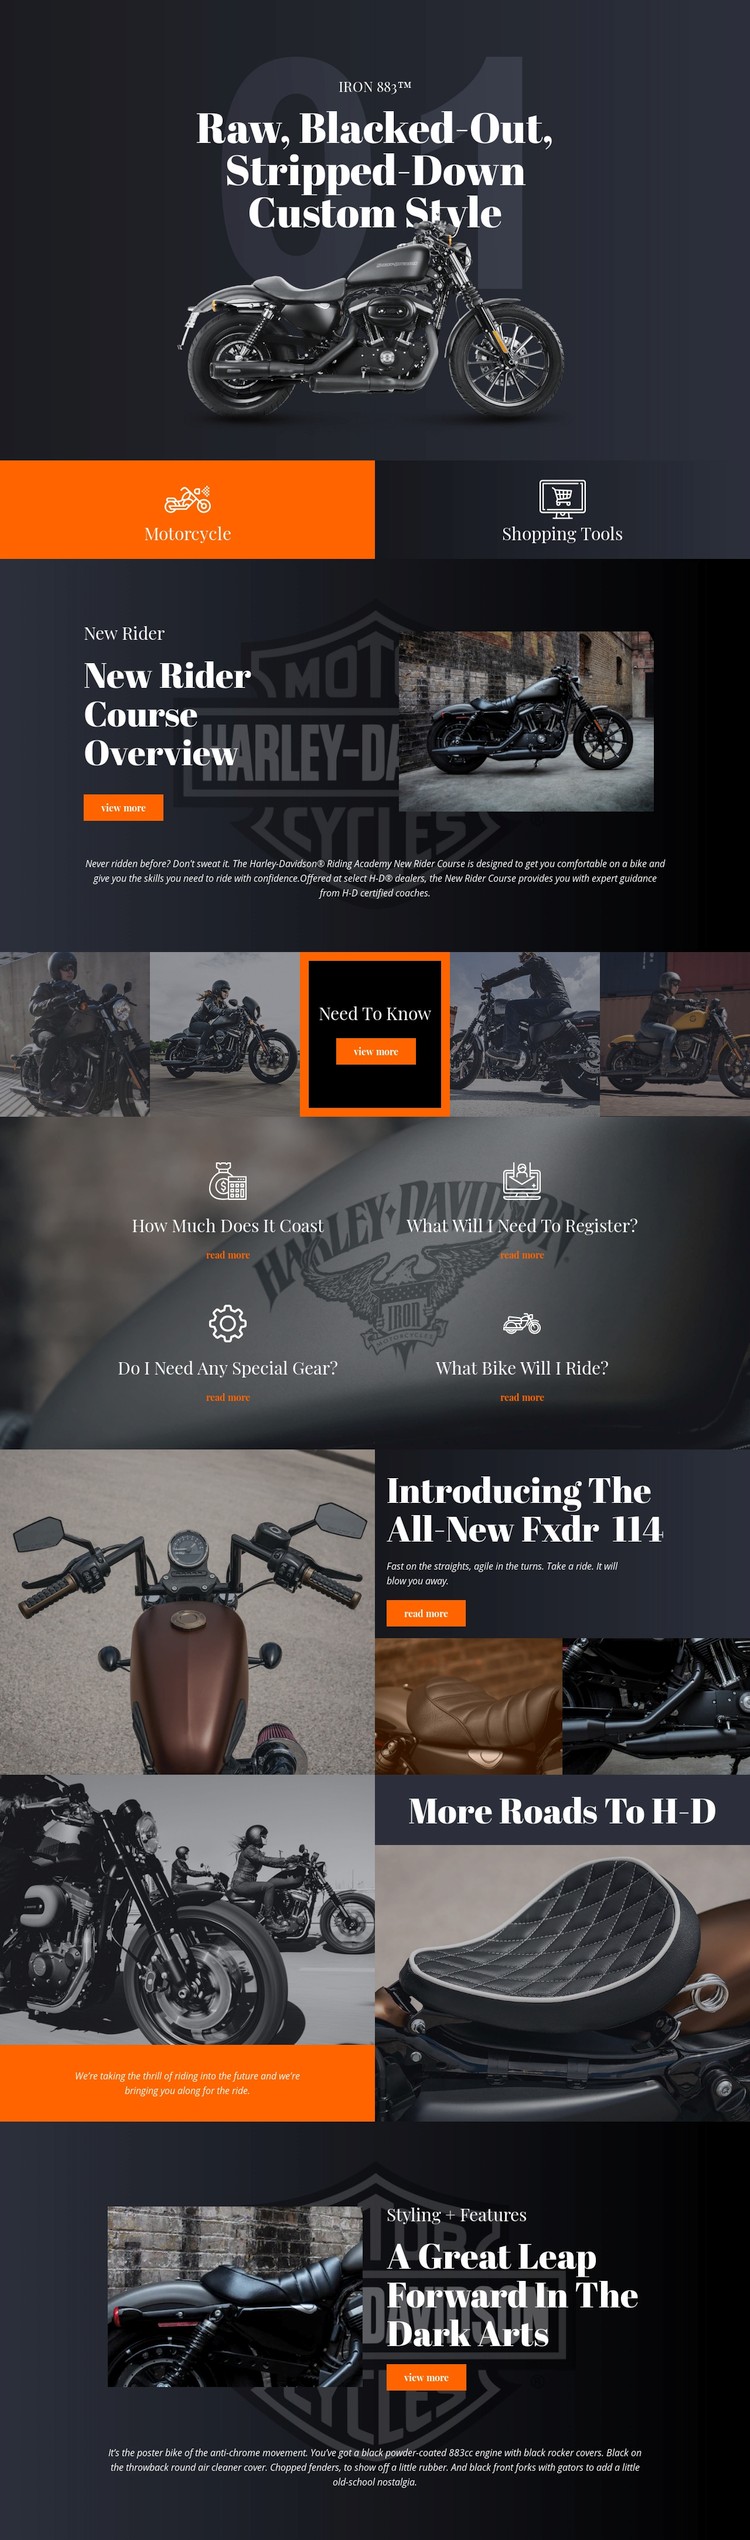 Harley Davidson Webflow Template Alternative